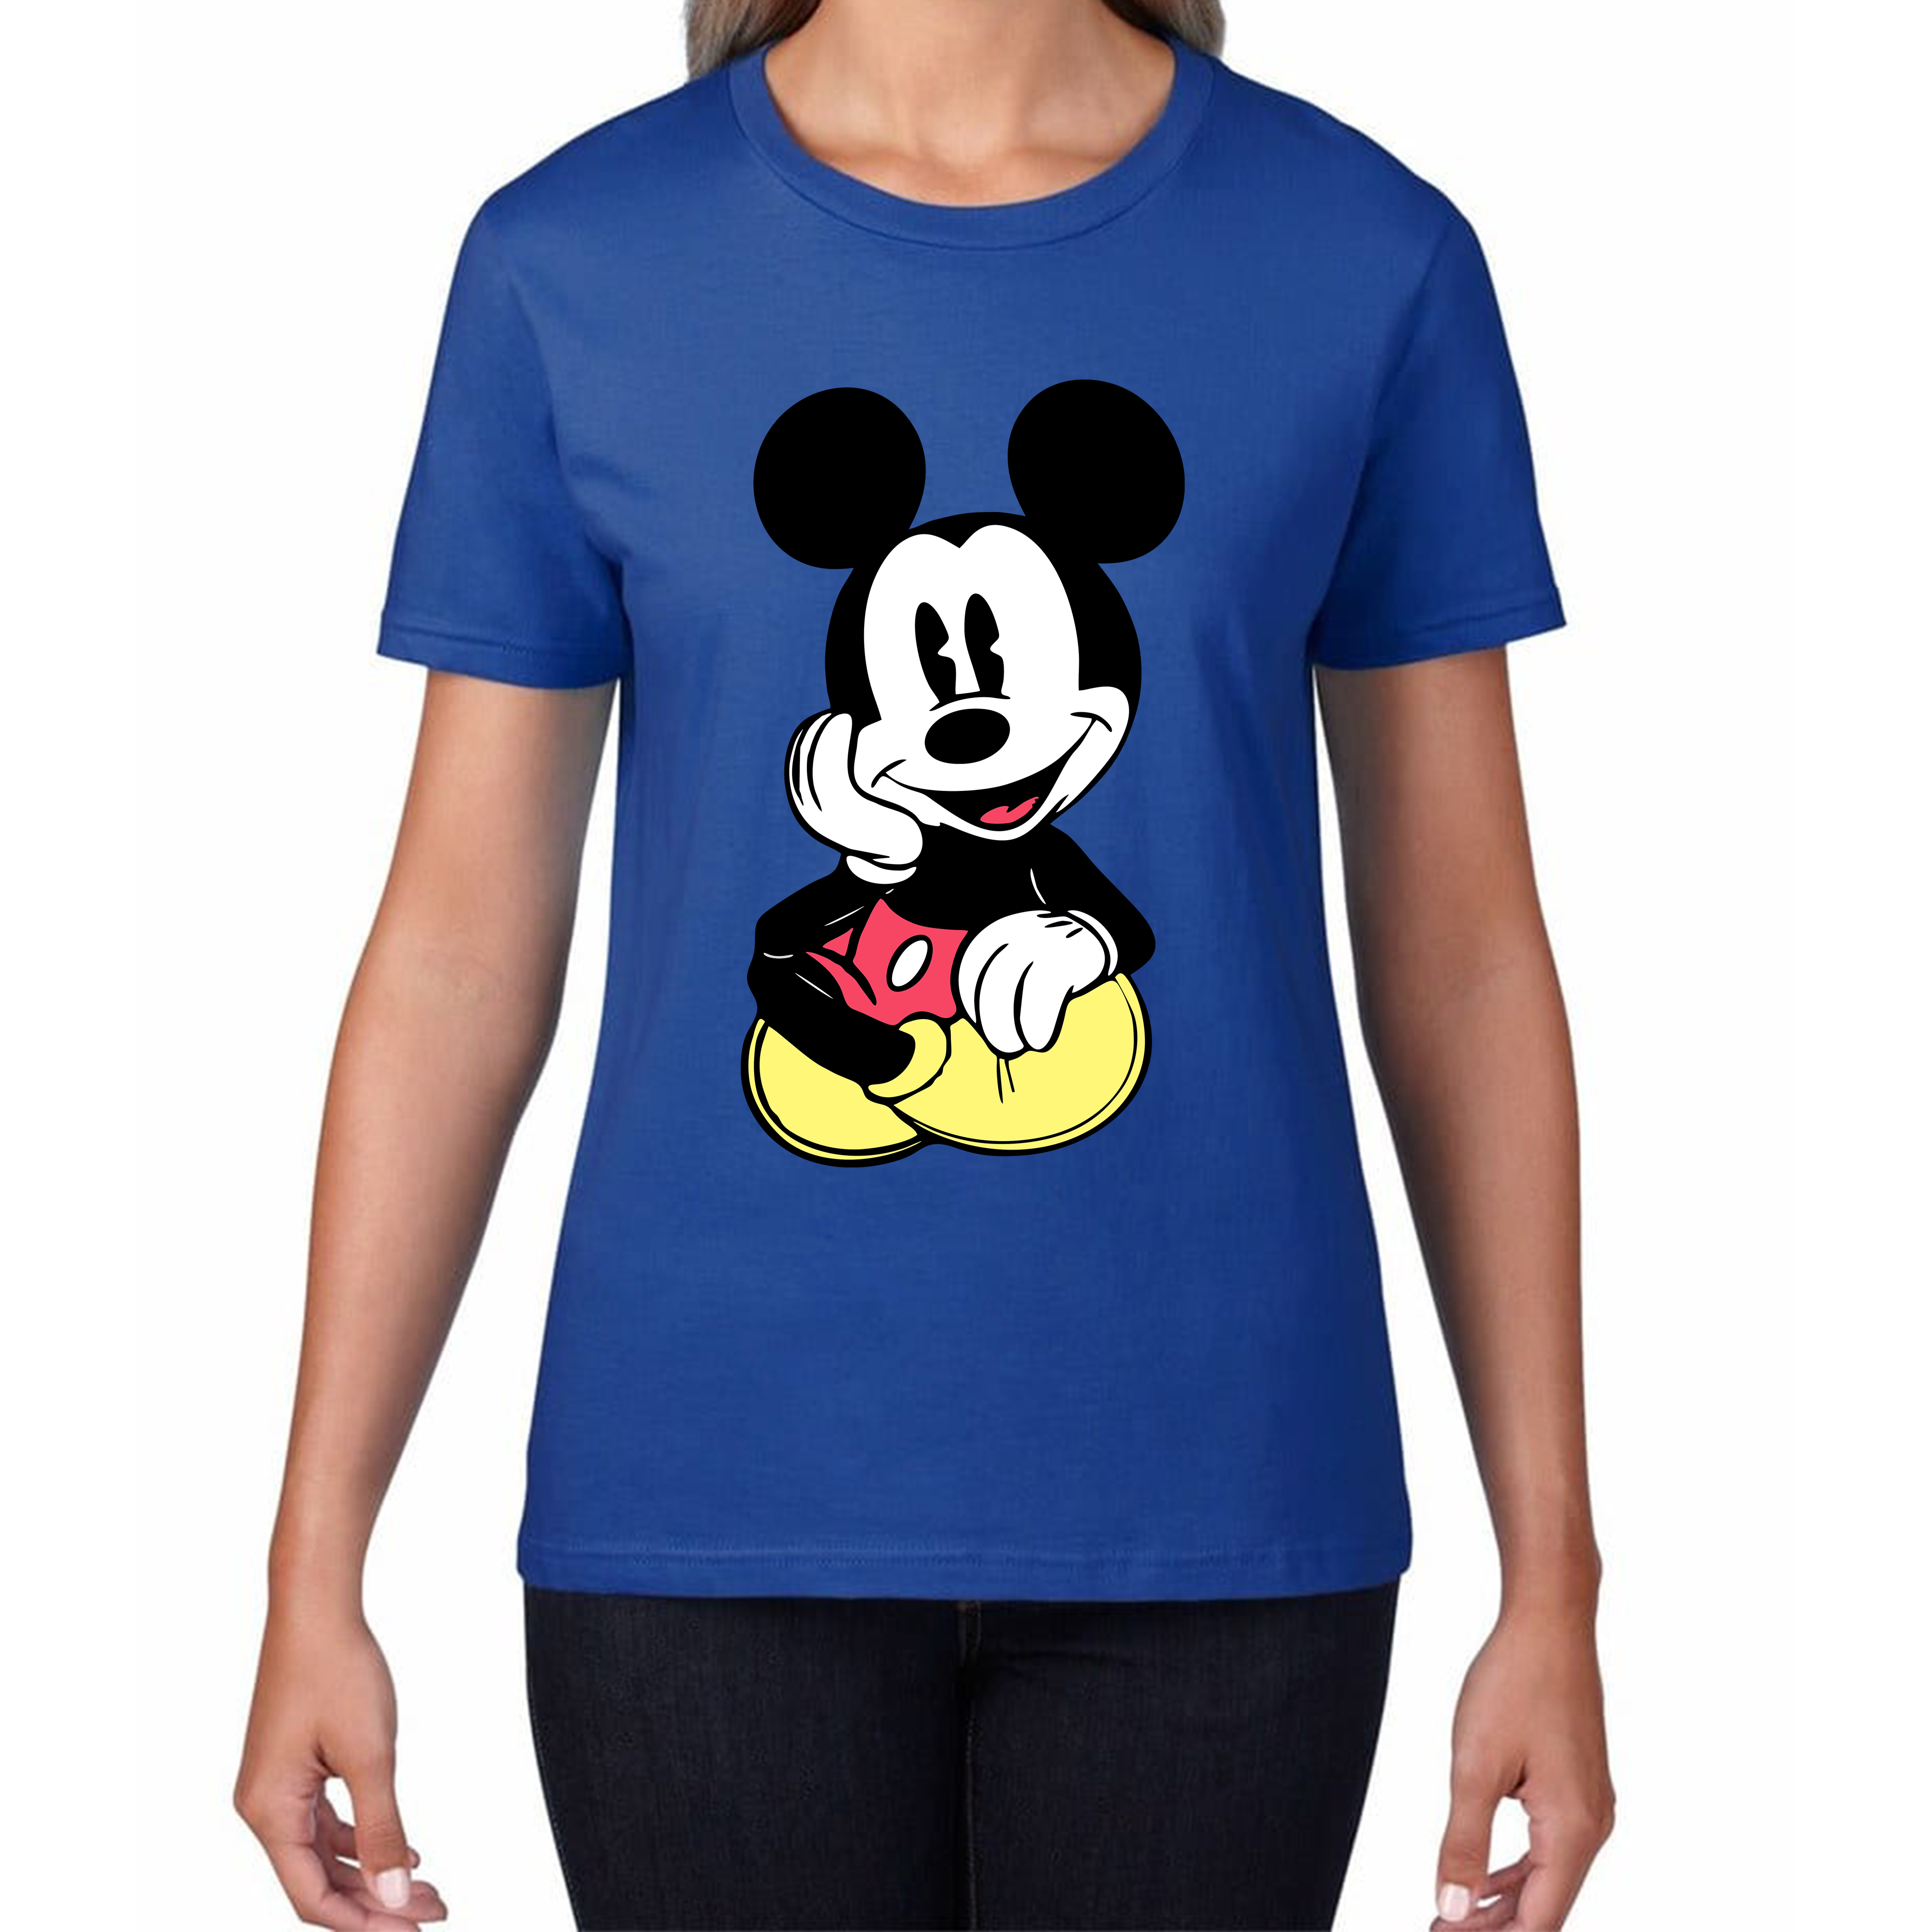 Disney Mickey Mouse Cute And Happy Cartoon Character Disney World Walt Disney Womens Tee Top